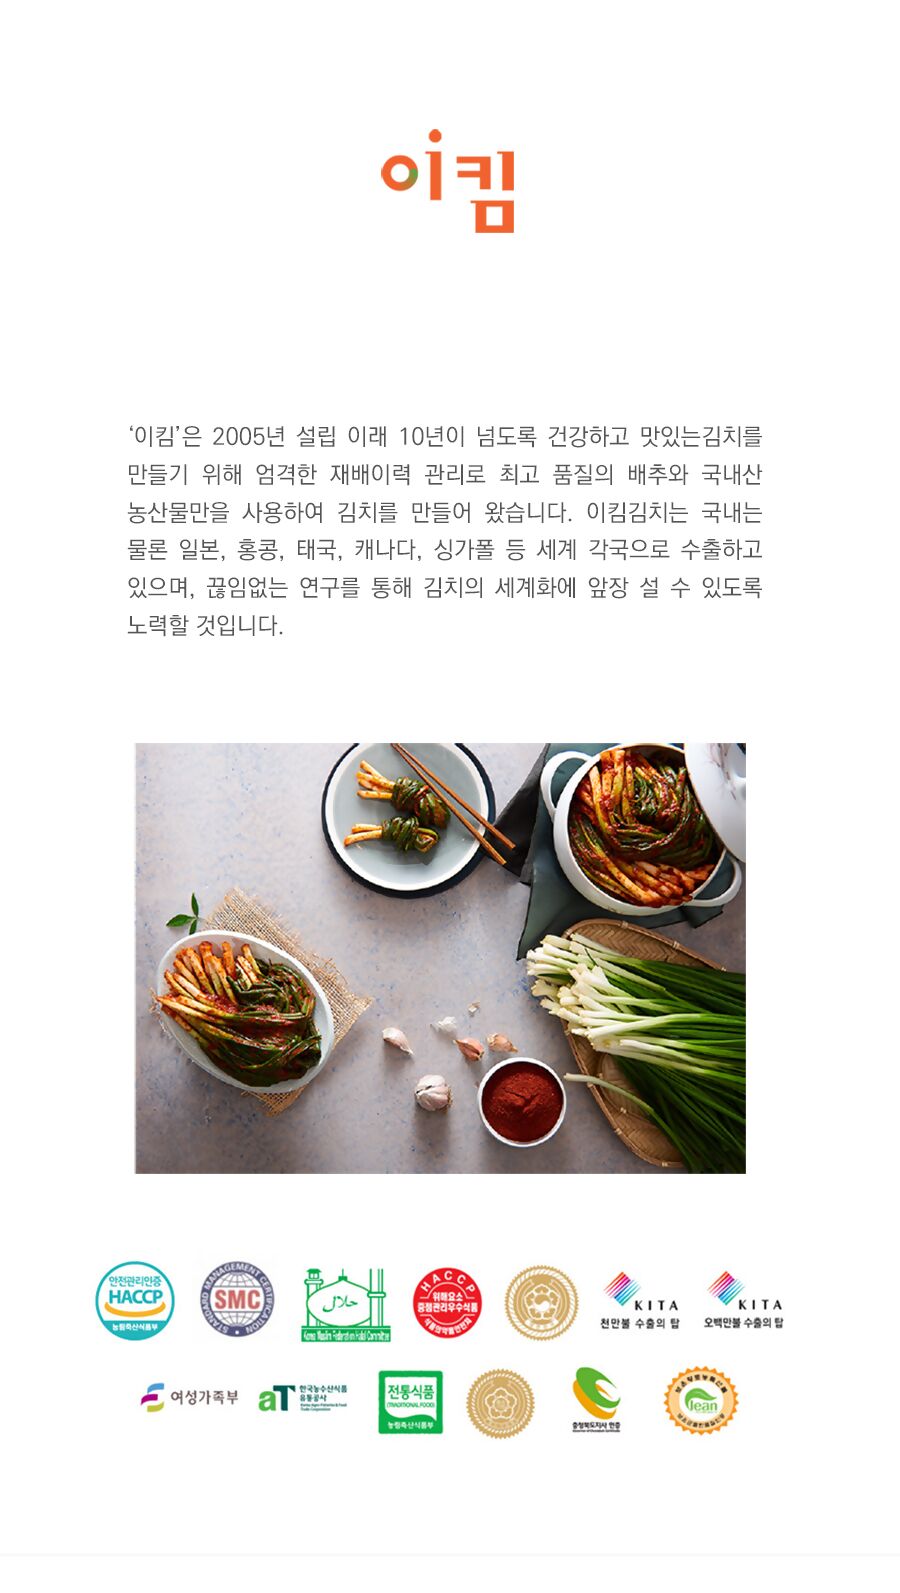 iikim Kimchi 4 kinds Set ( 이킴 김치 4종 세트 )